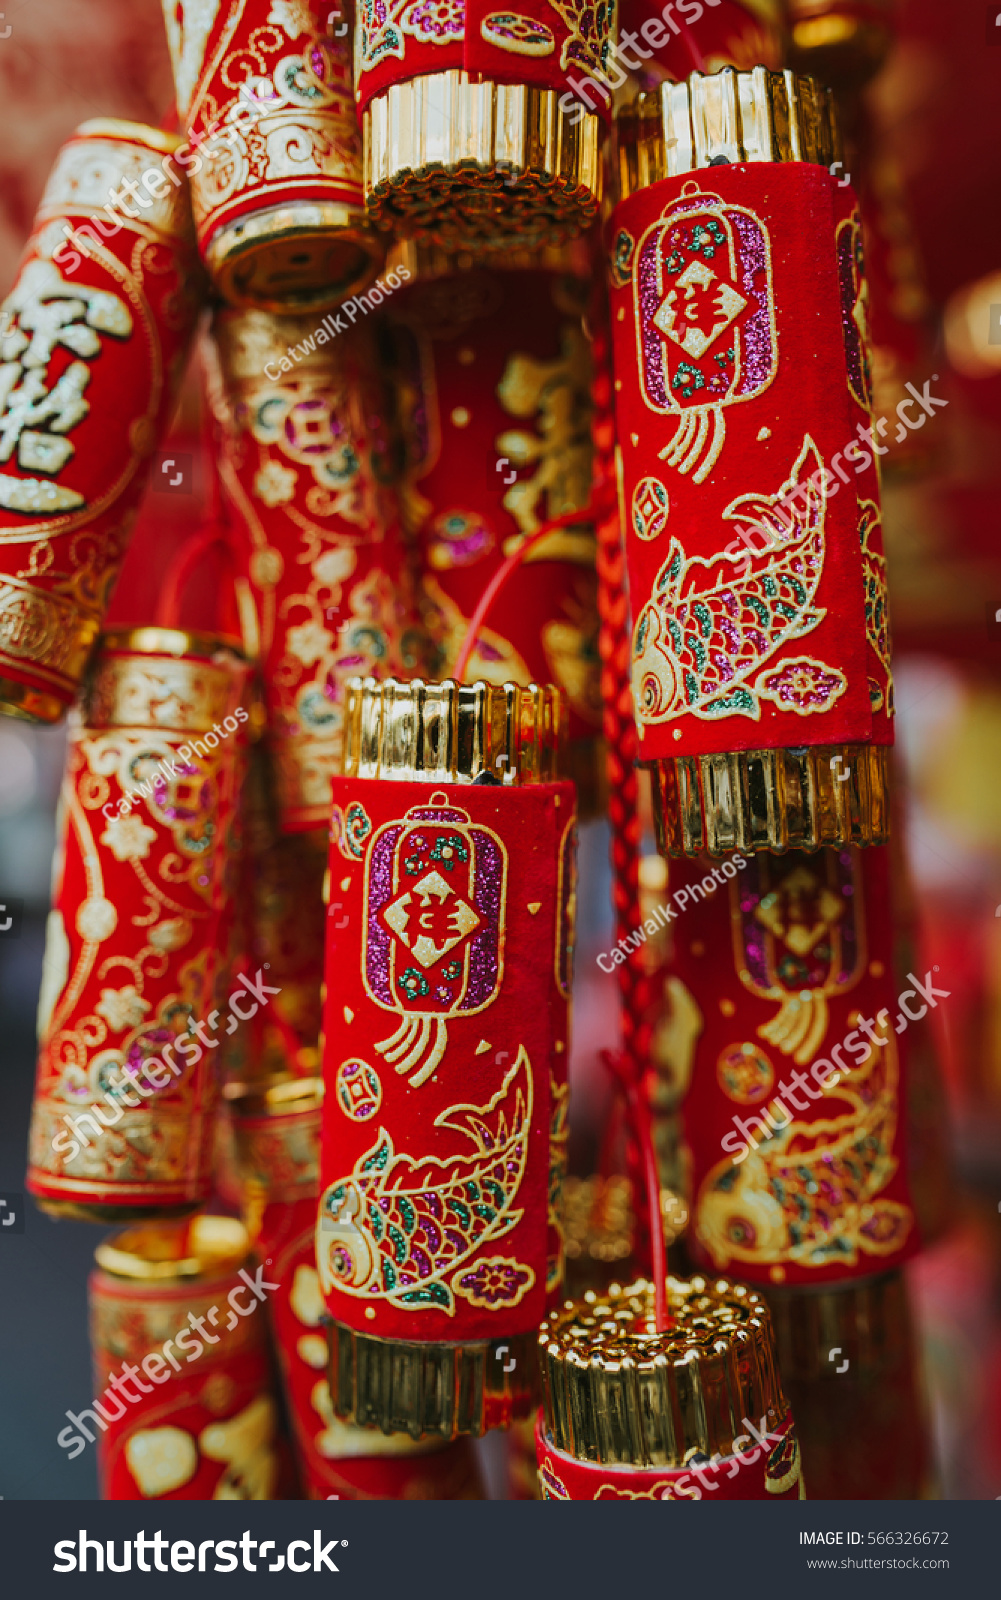 Chinese New Year 2017 Decorations Stock Photo 566326672 - Shutterstock